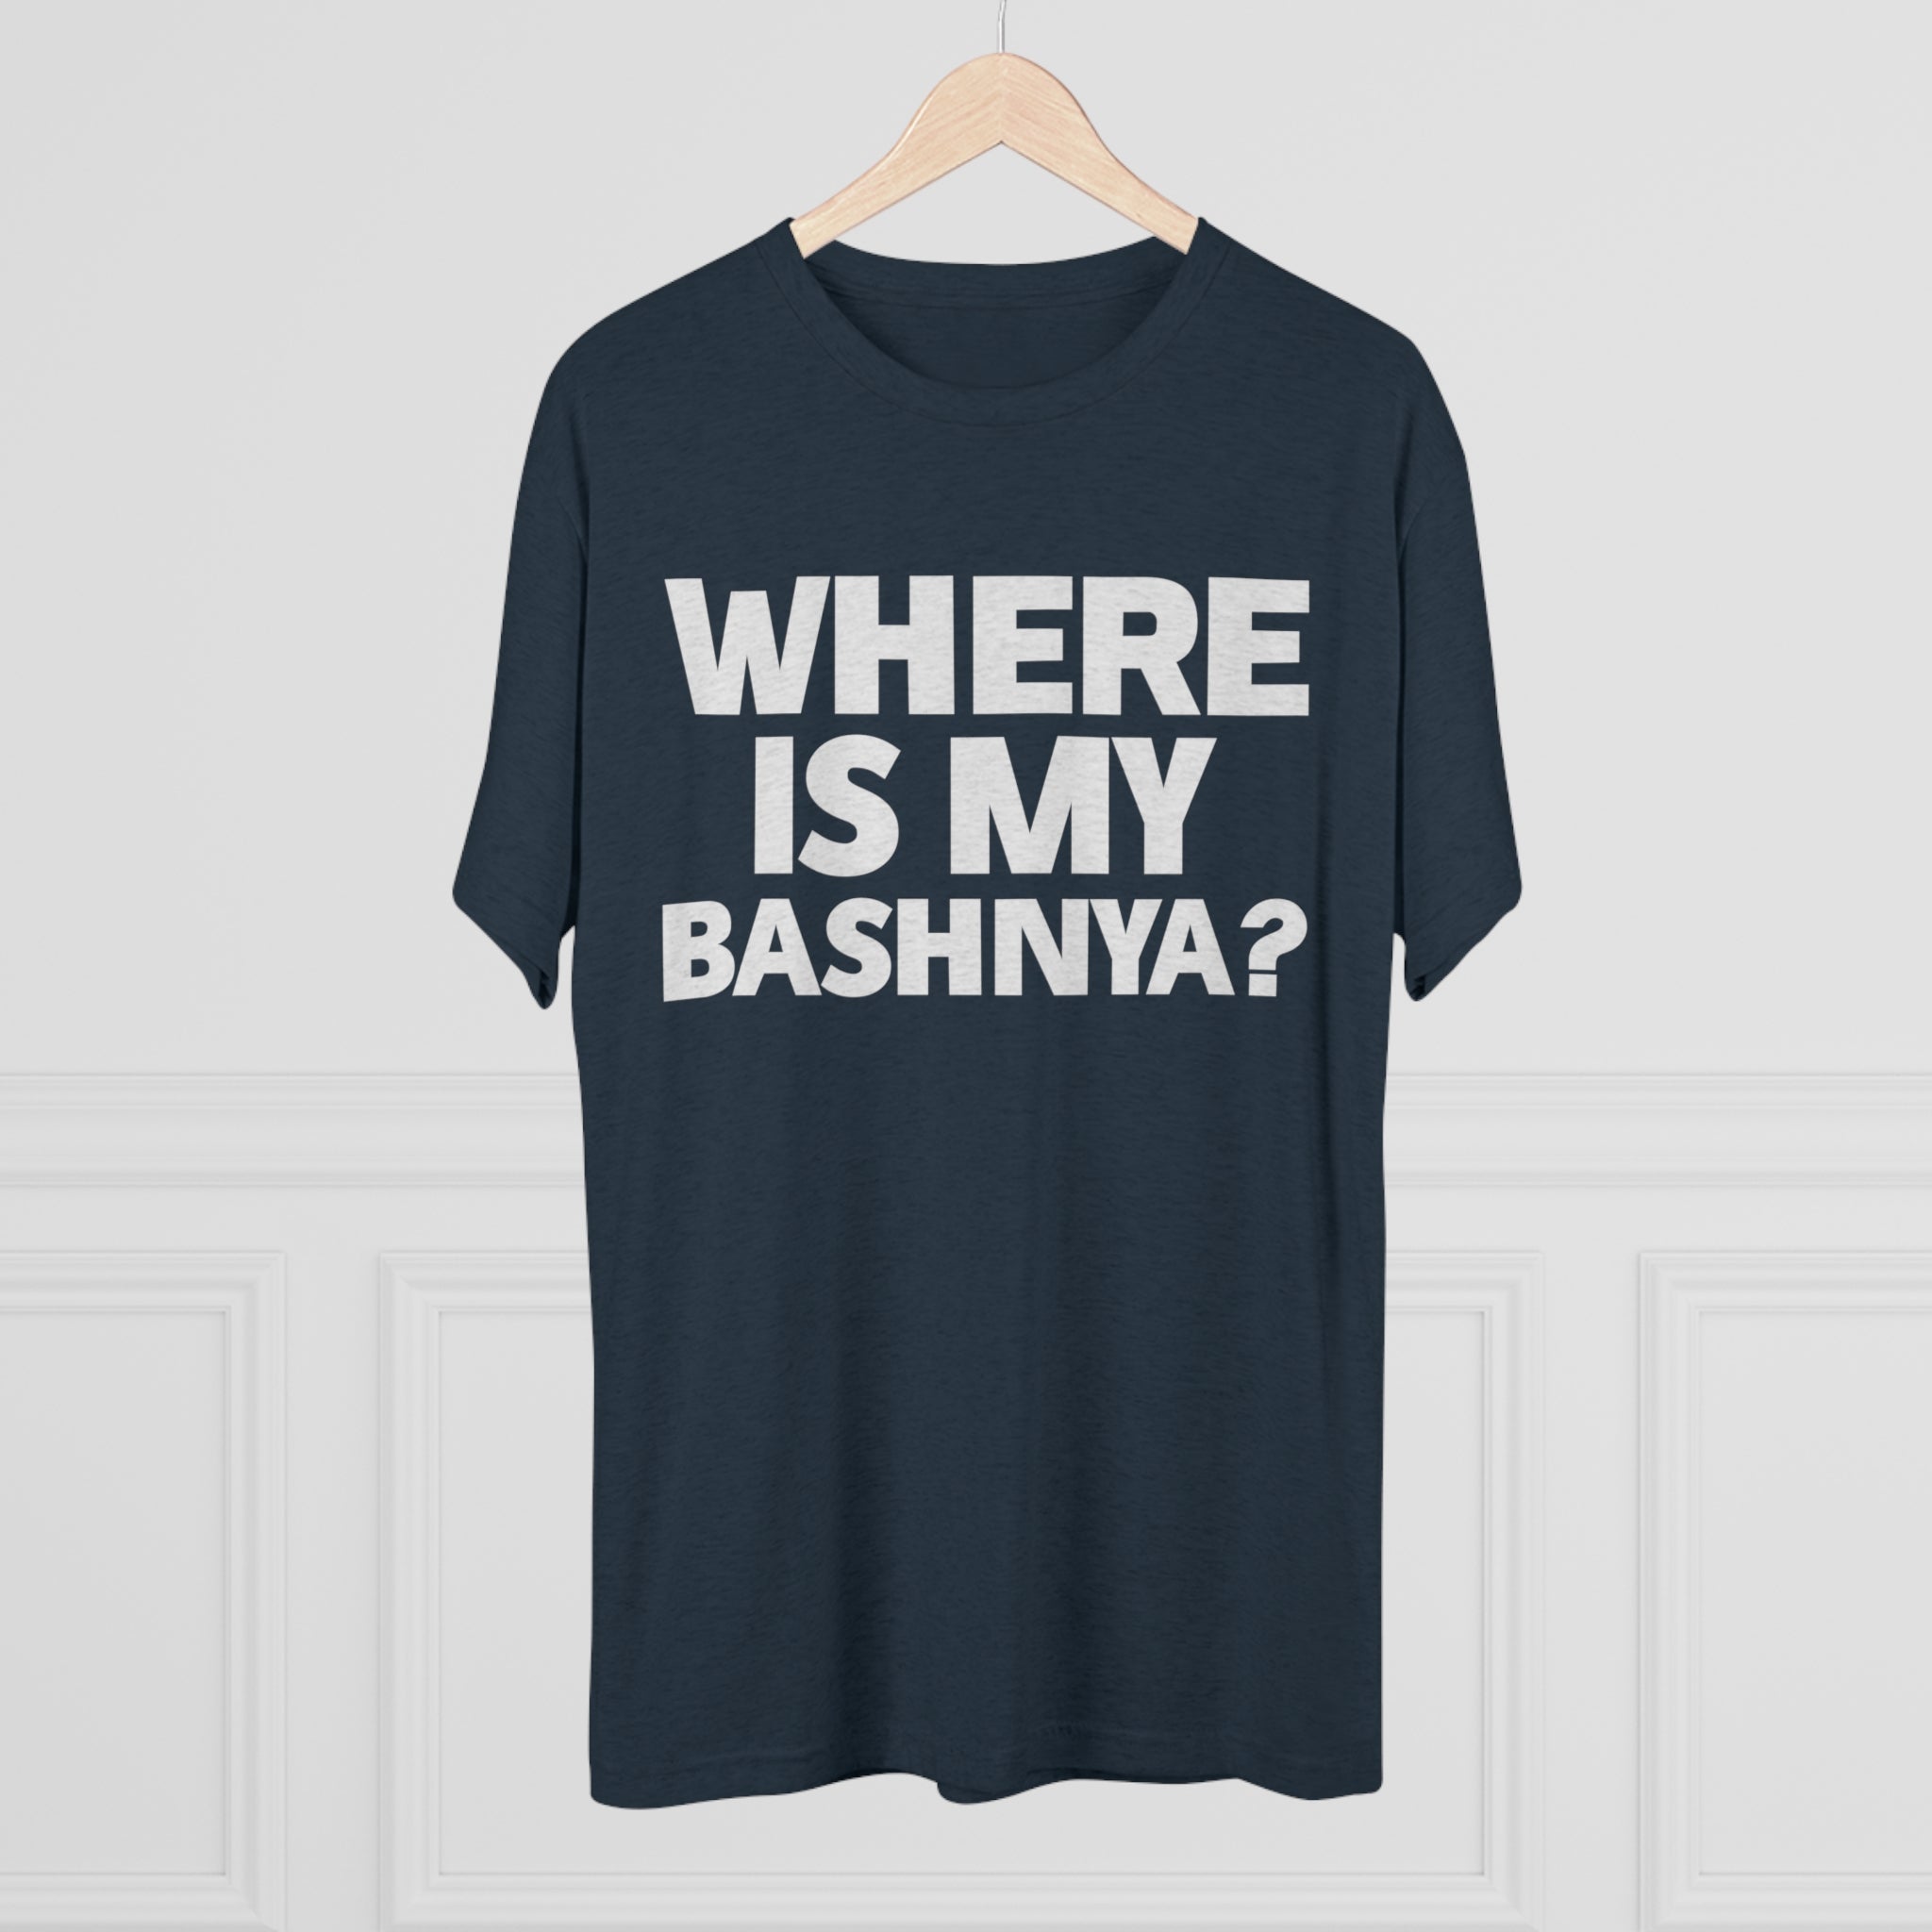 Where is My Bashnya? Unisex Tri-Blend Crew Tee